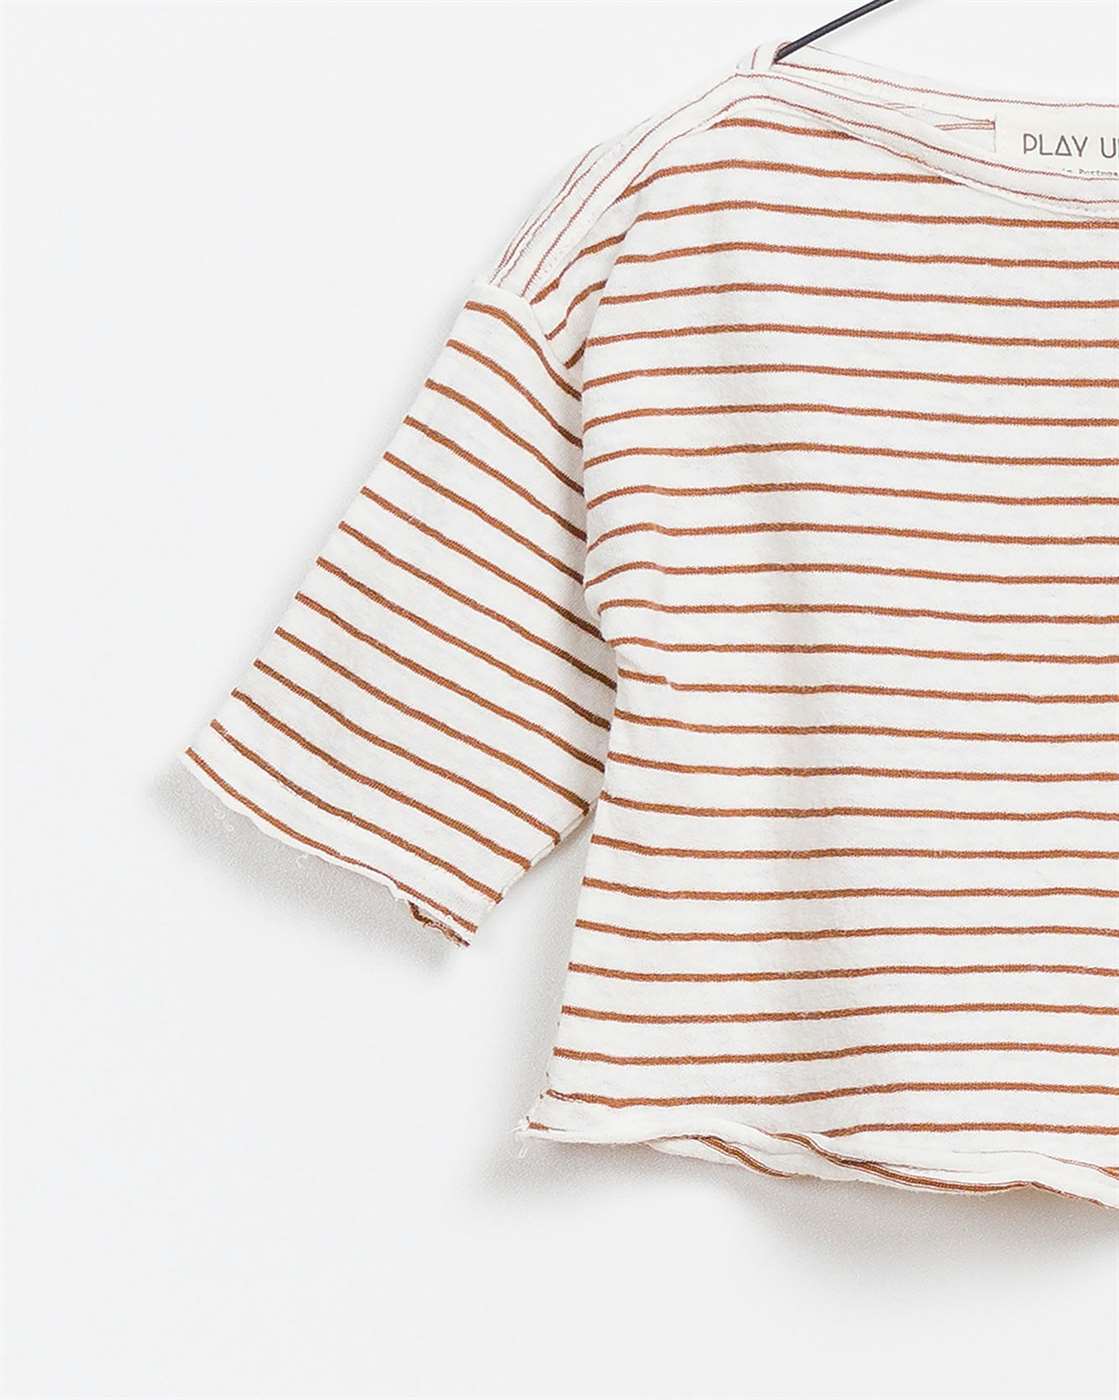 BeeBoo|BeeBoo PlayUp vêtements bébé baby clothes T Shirt LS Striped coton lin cotton linen 2